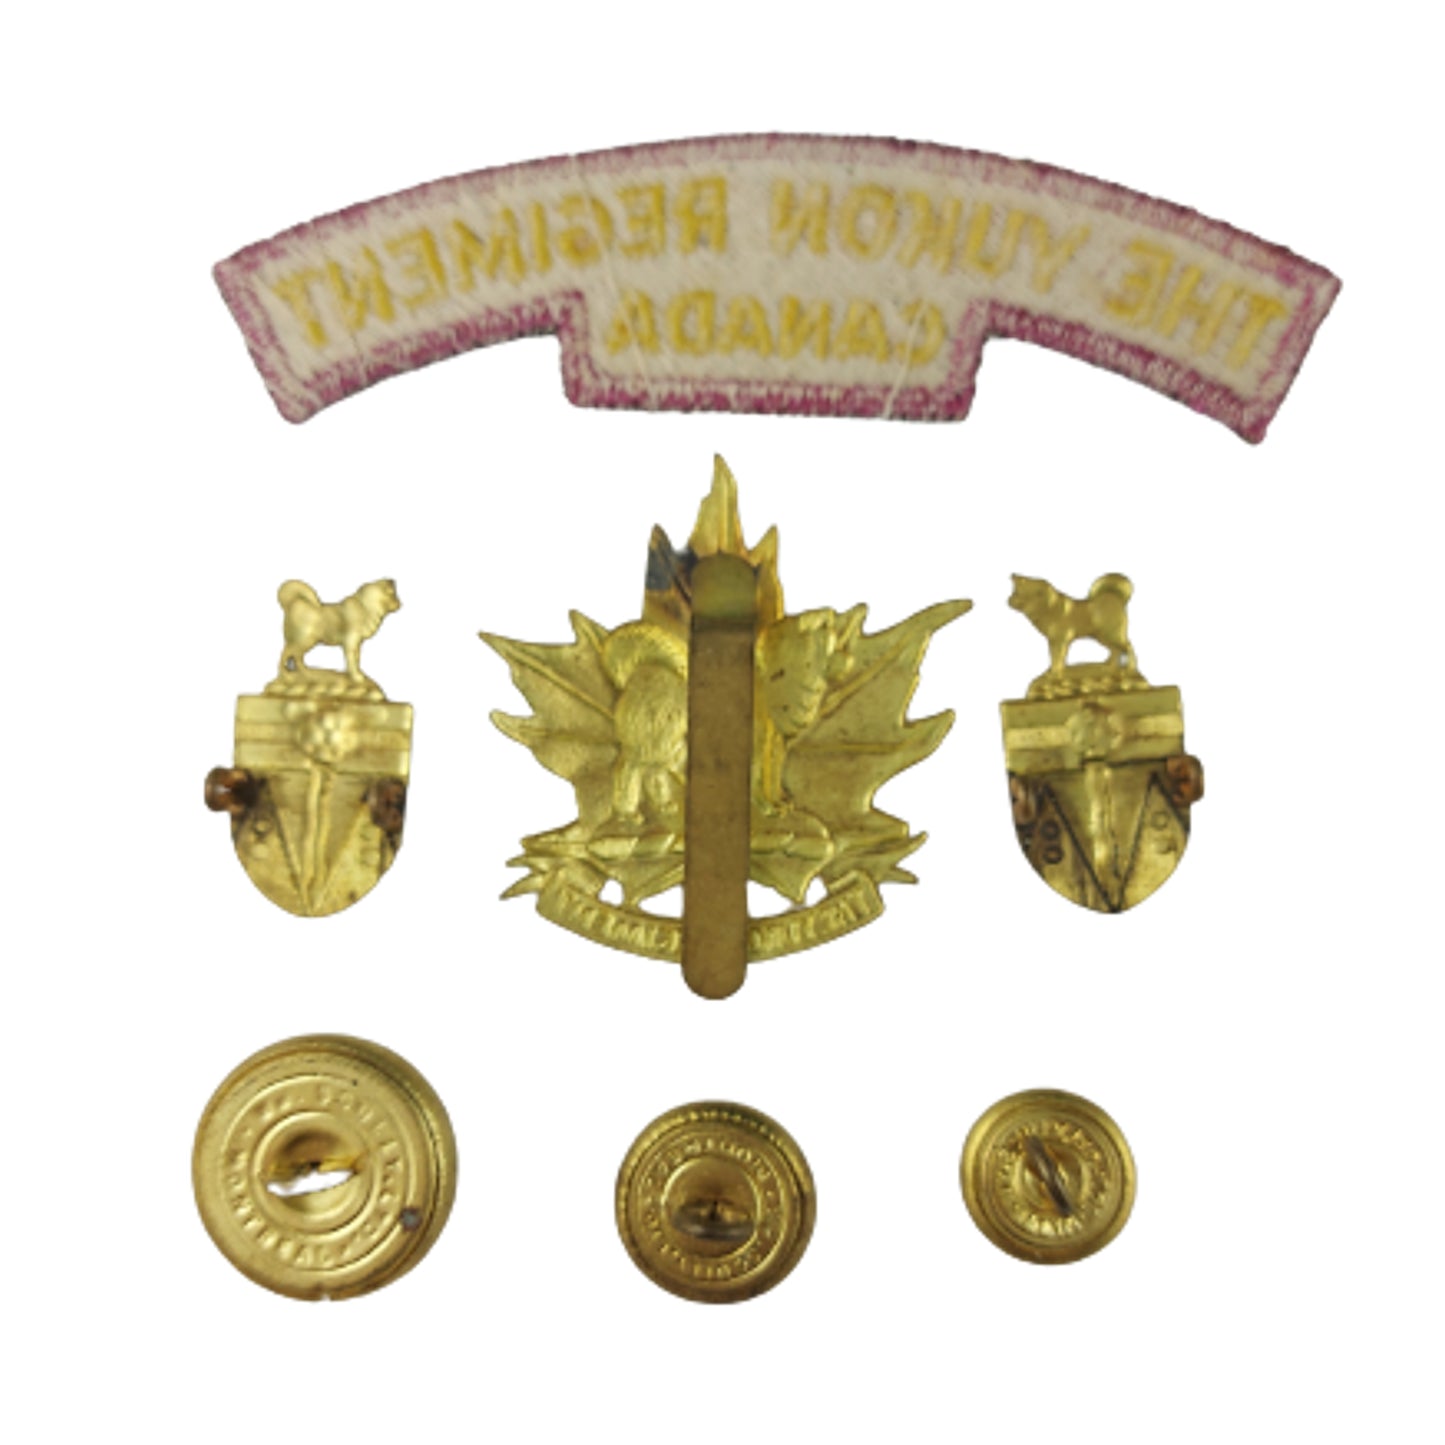 Post WW2 Canadian Yukon Regiment Insignia Grouping